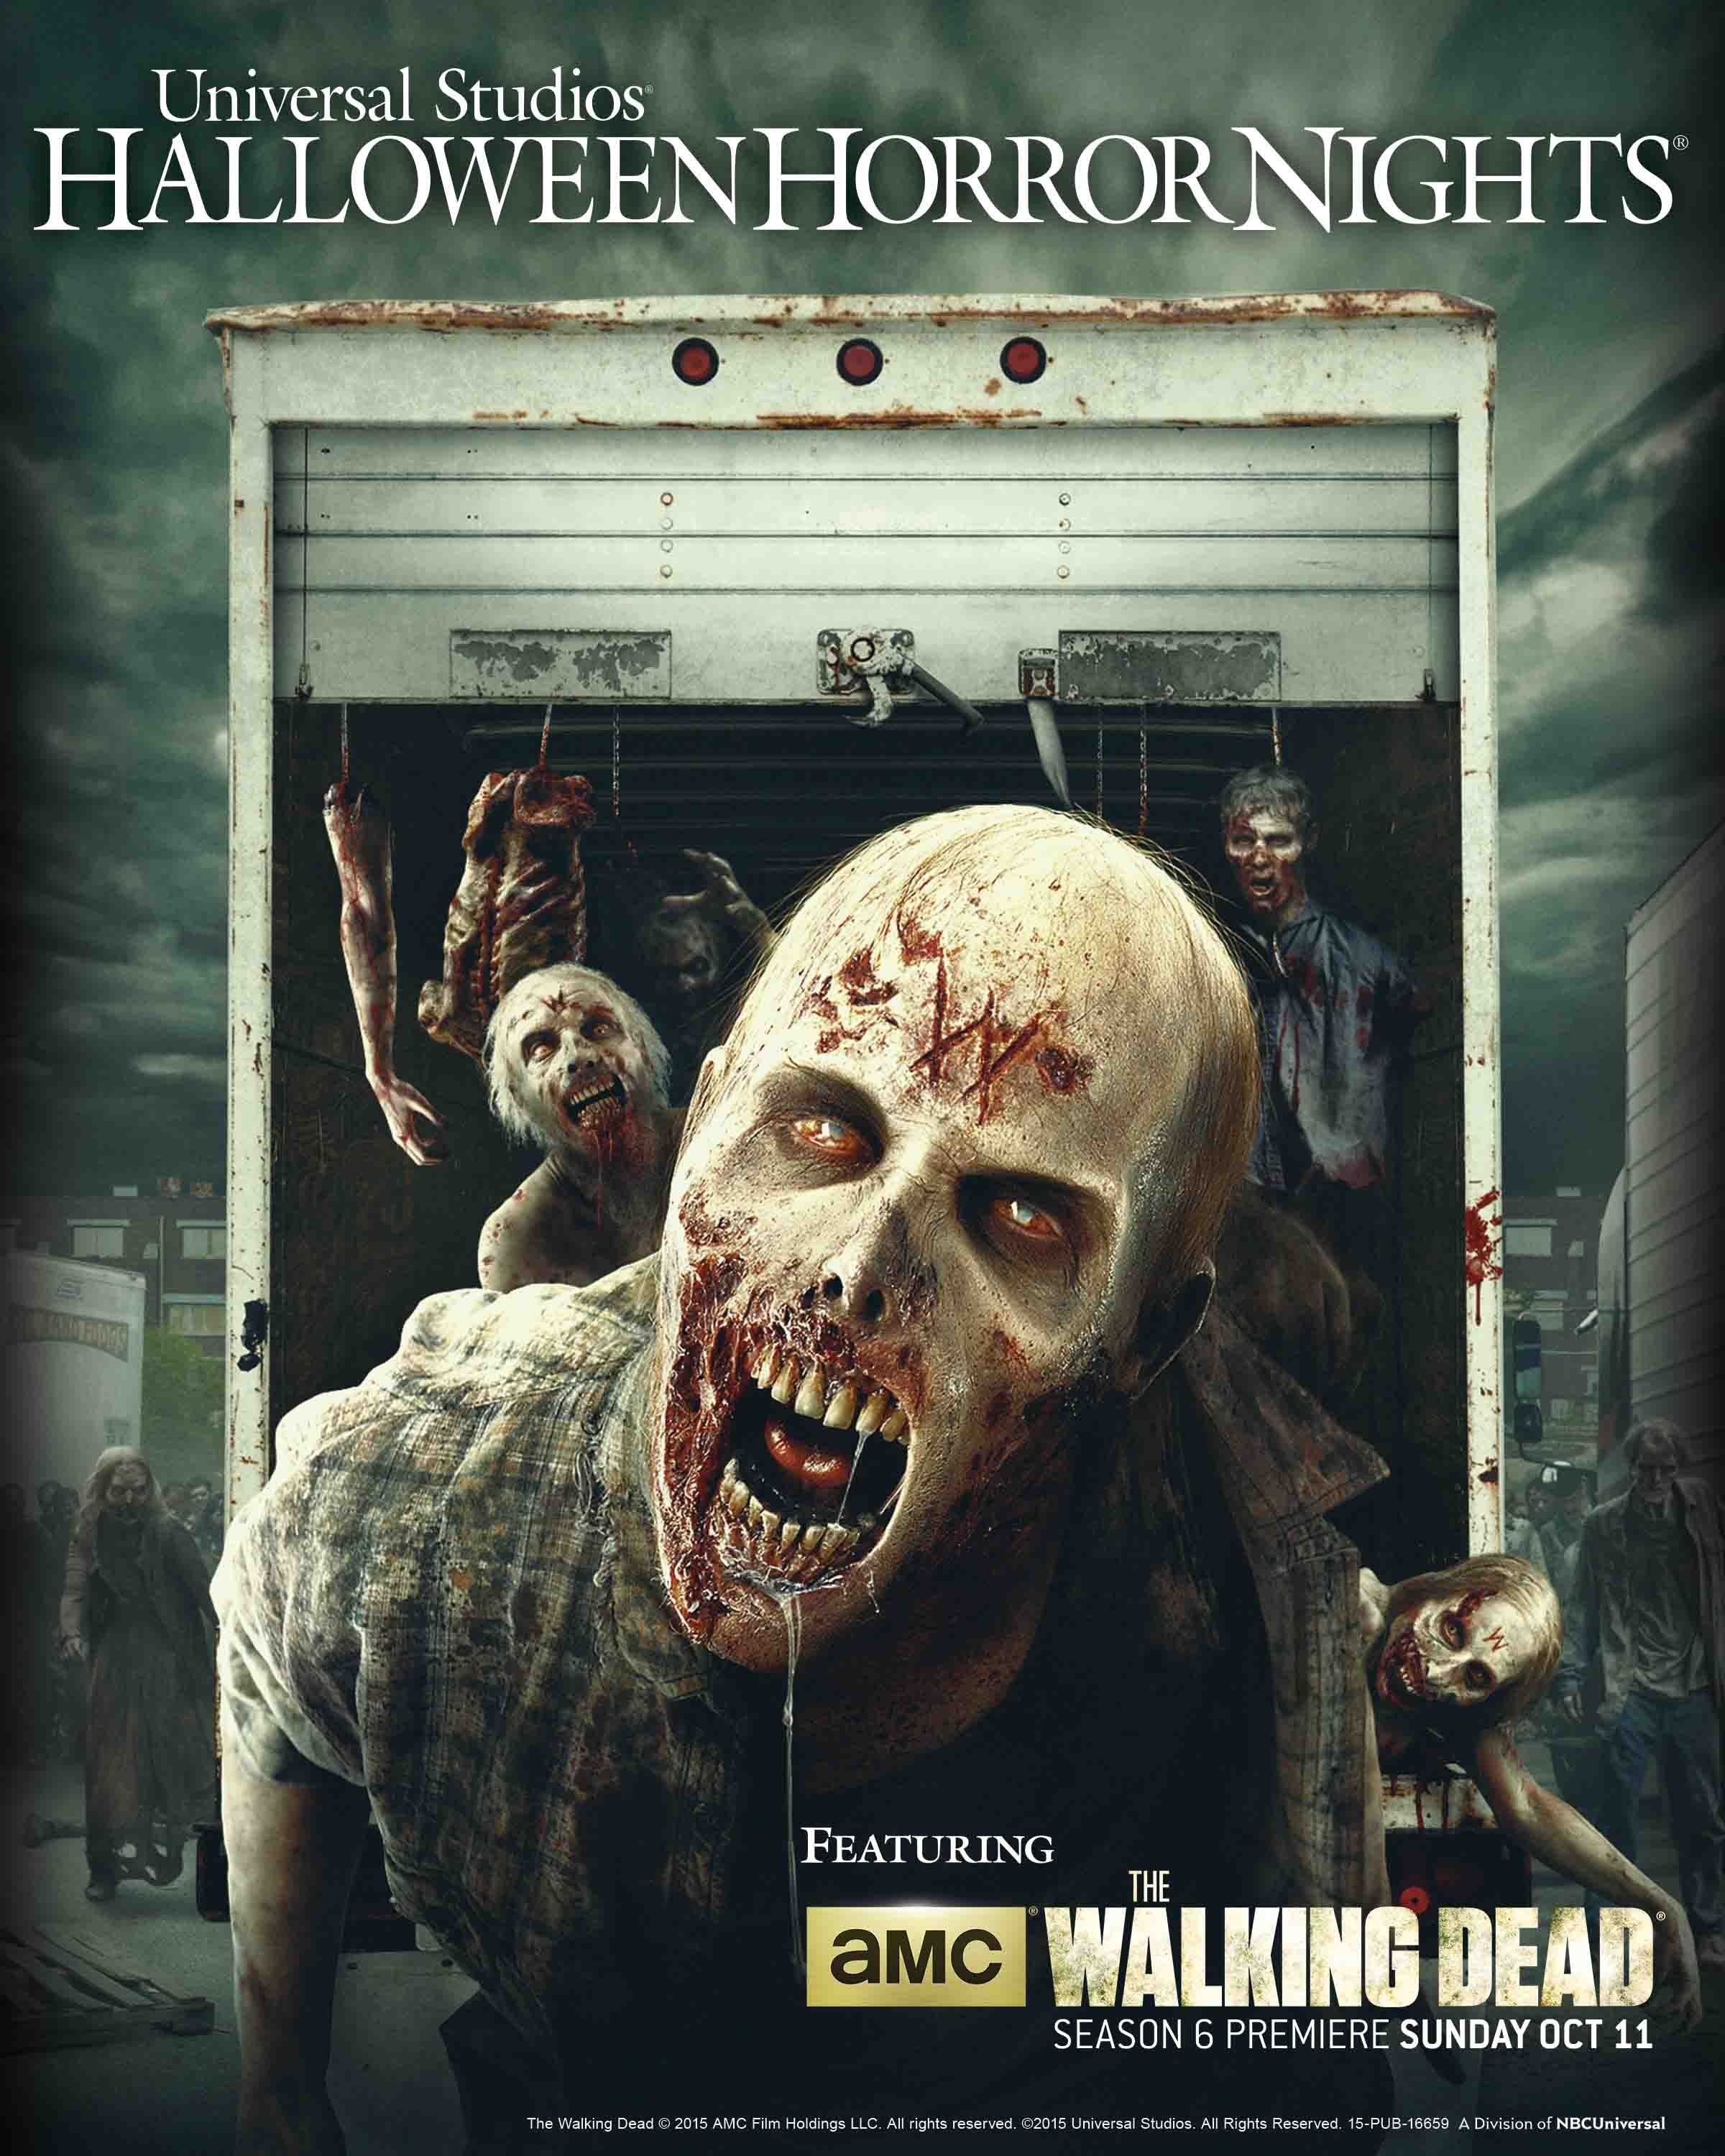 The Walking Dead Halloween Horror Nights